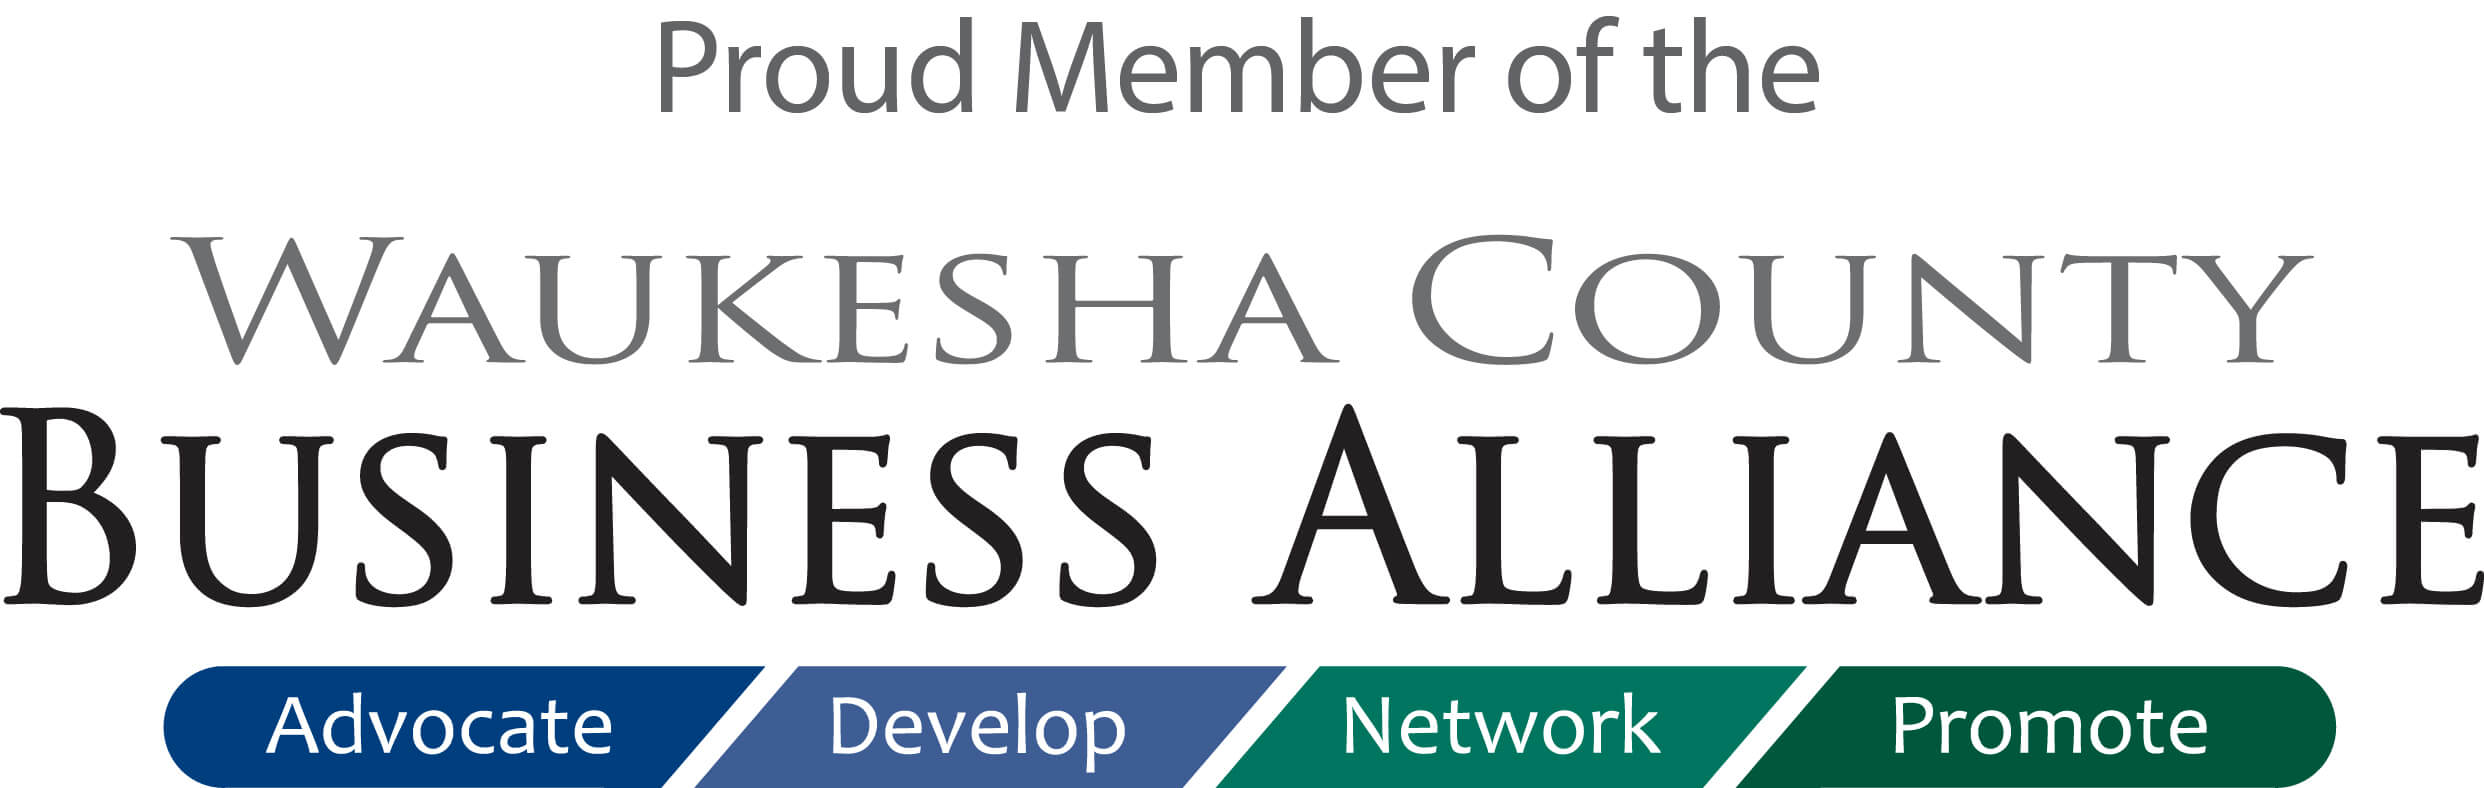 Waukesha County business Alliance